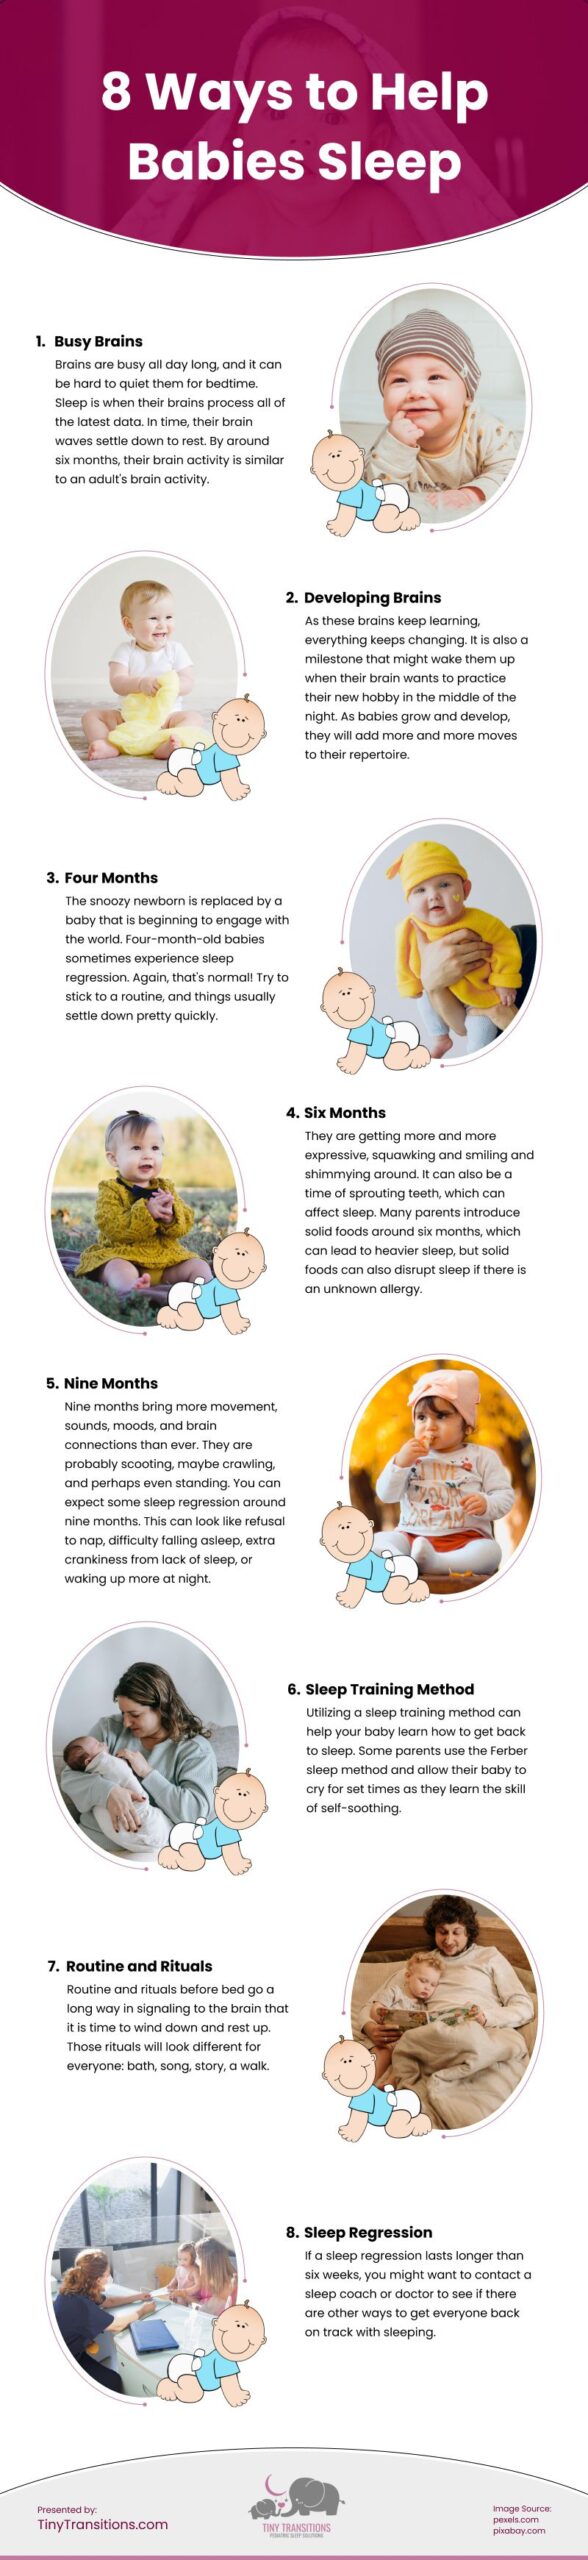 8 Ways to Help Babies Sleep Infographic